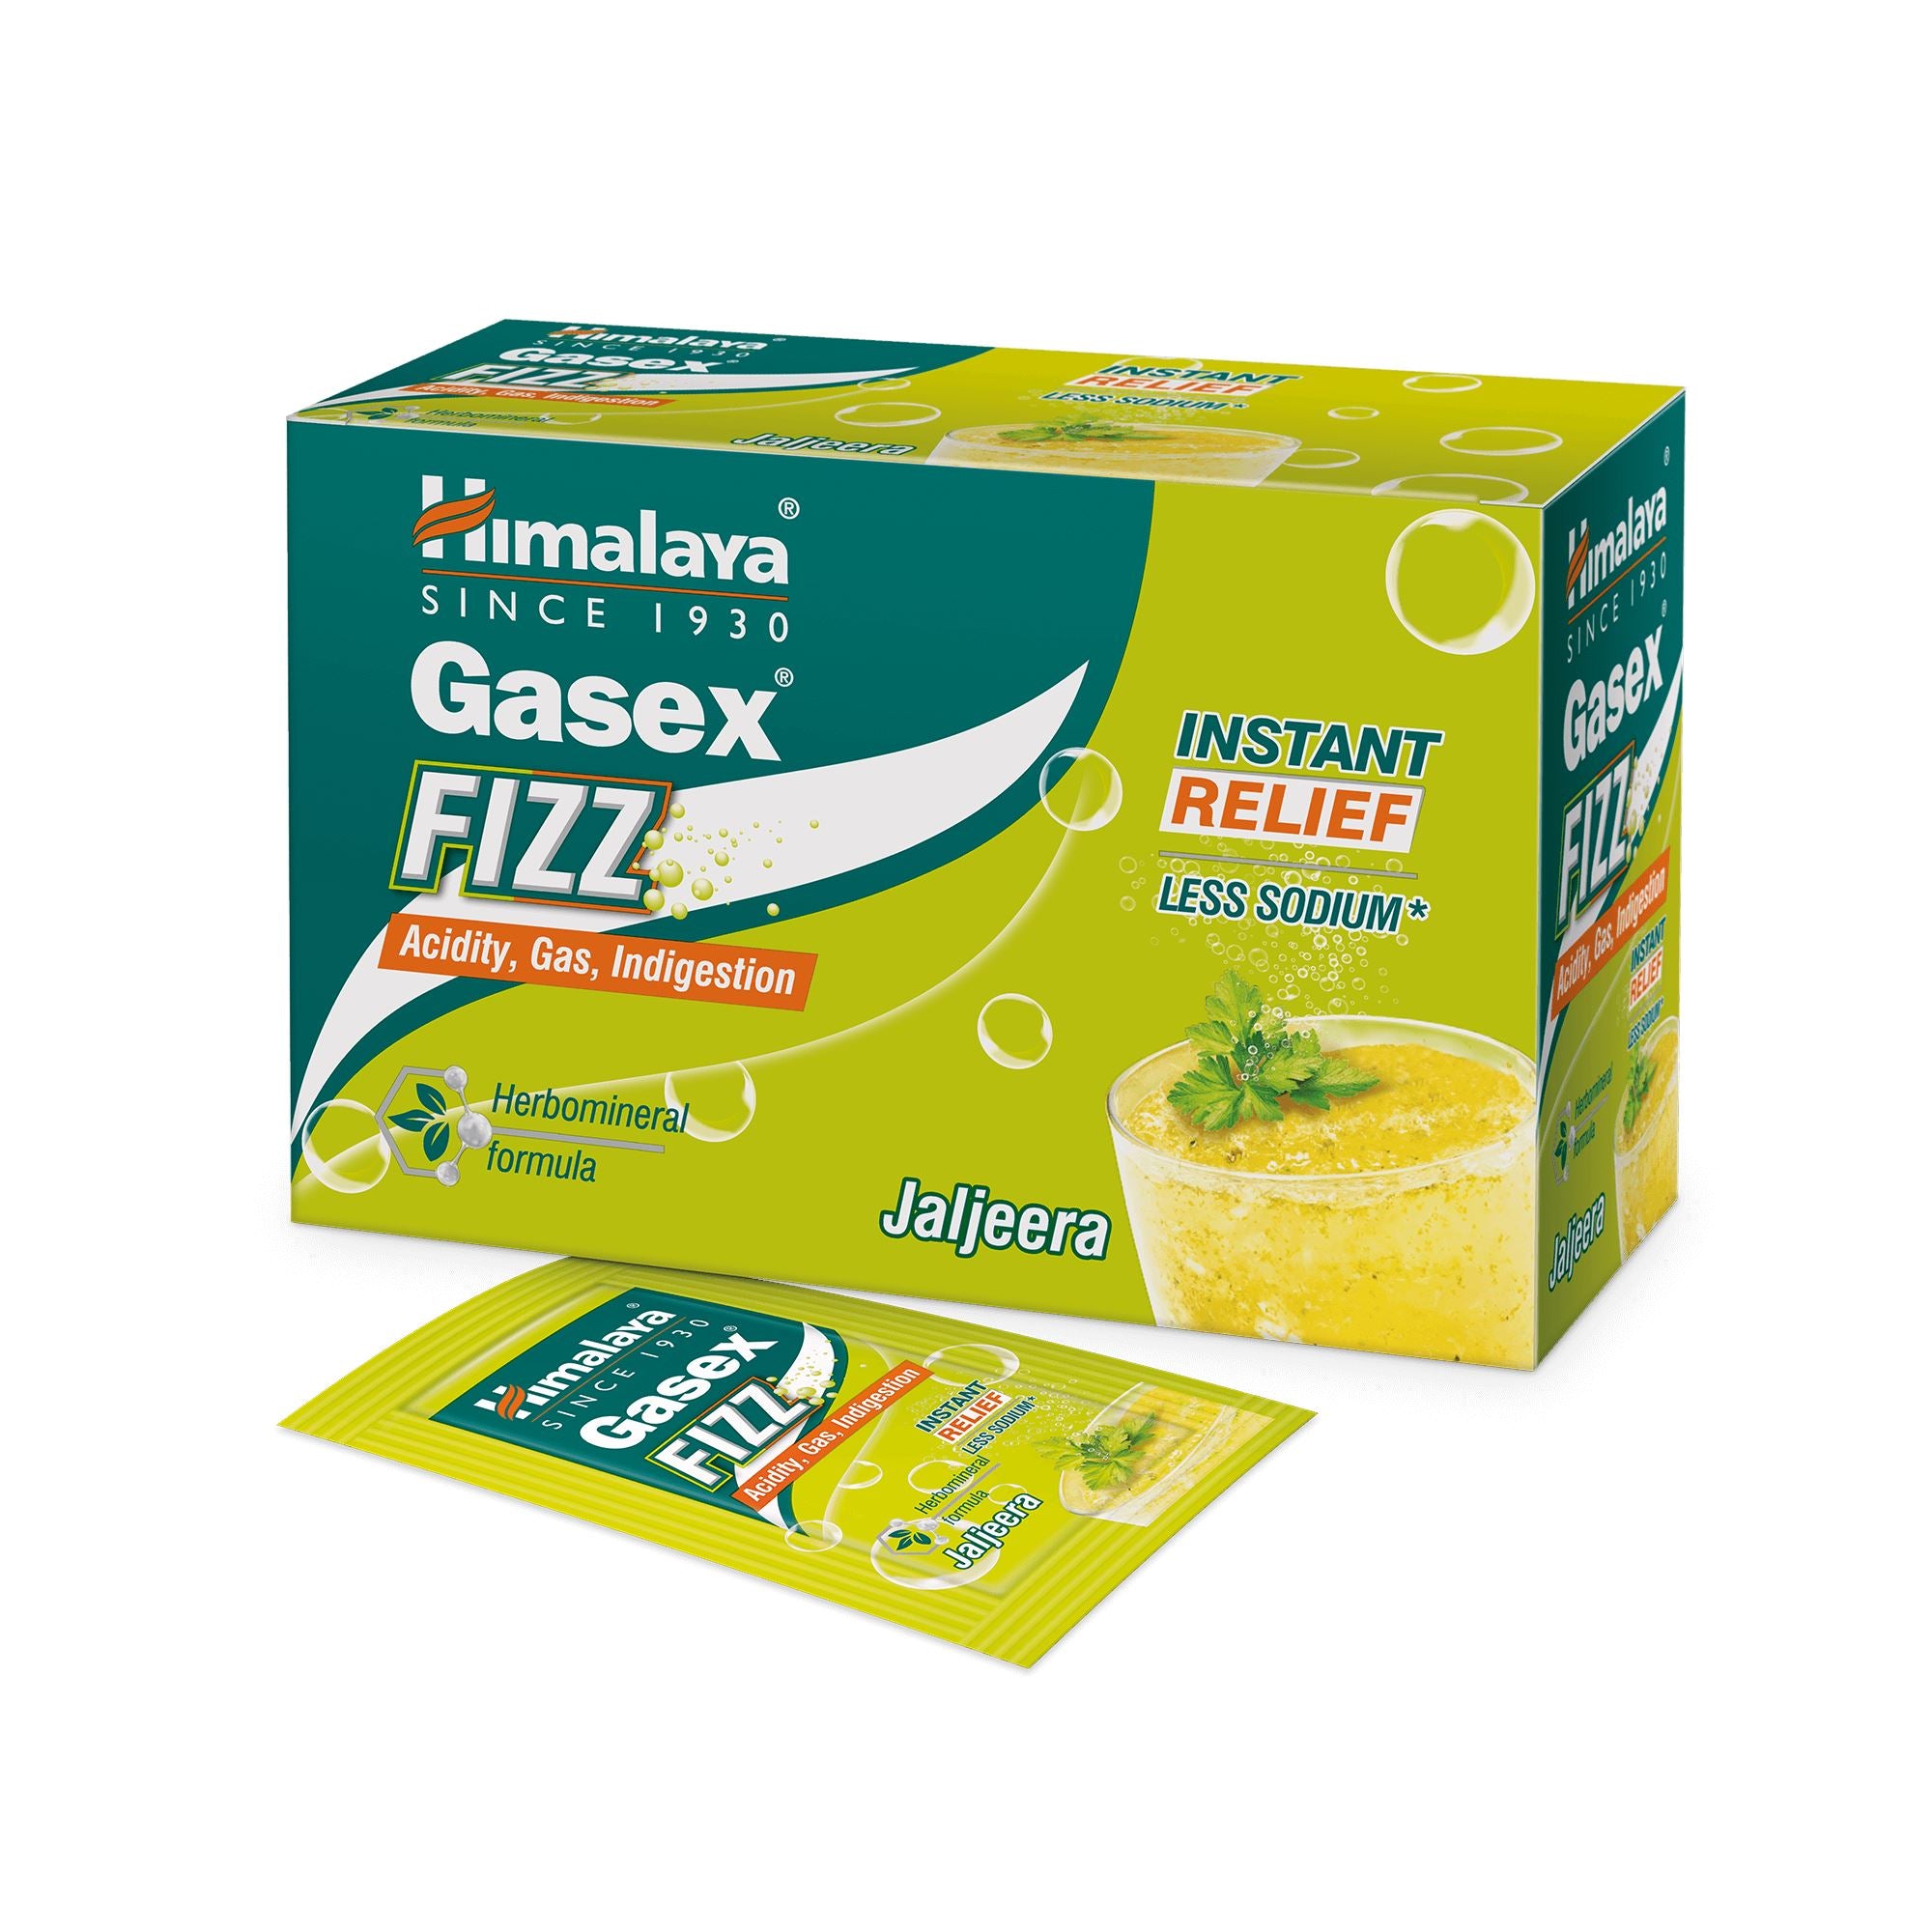 Himalaya Gasex Fizz (Jaljeera) 10s - Instant Relief from Acidity